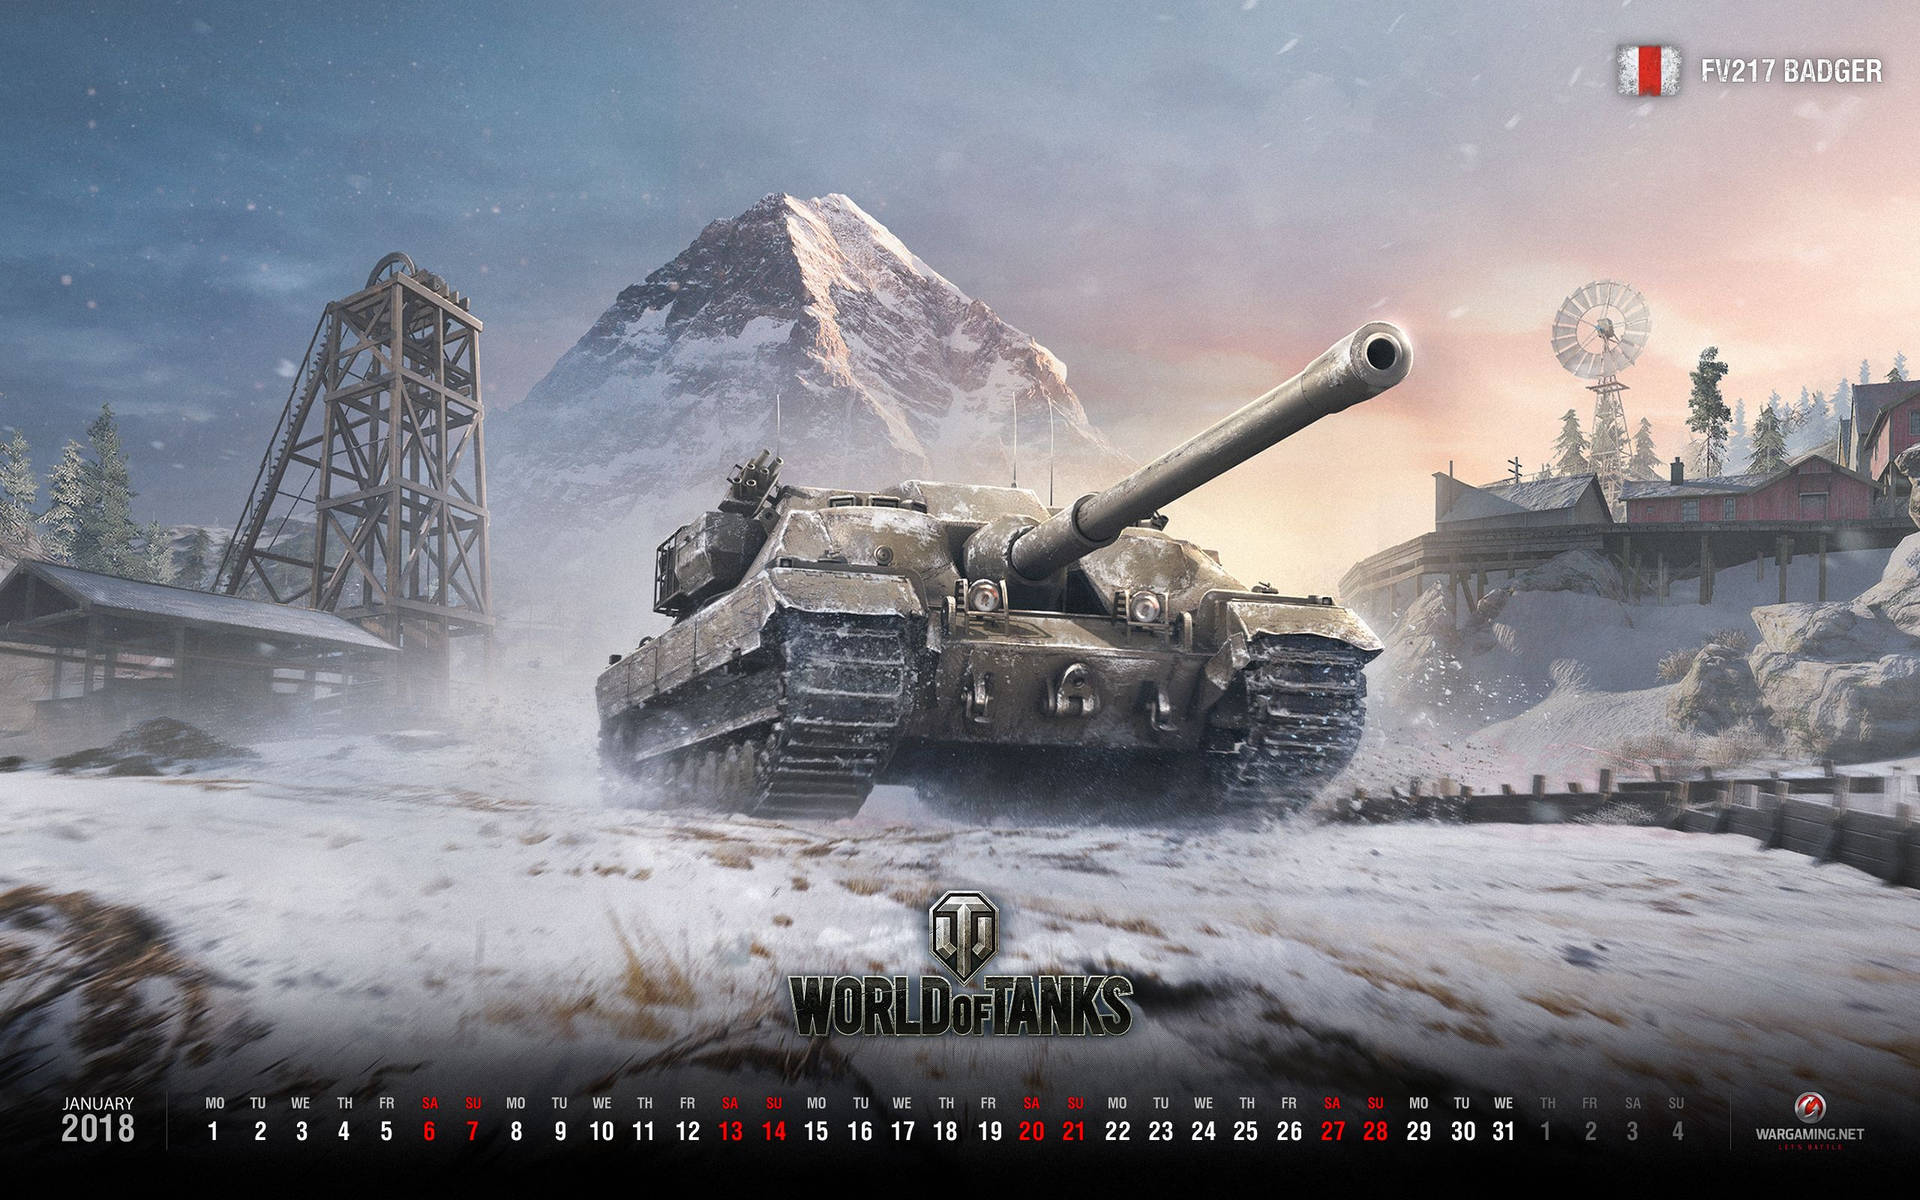 World Of Tanks Fv217 Badger Background